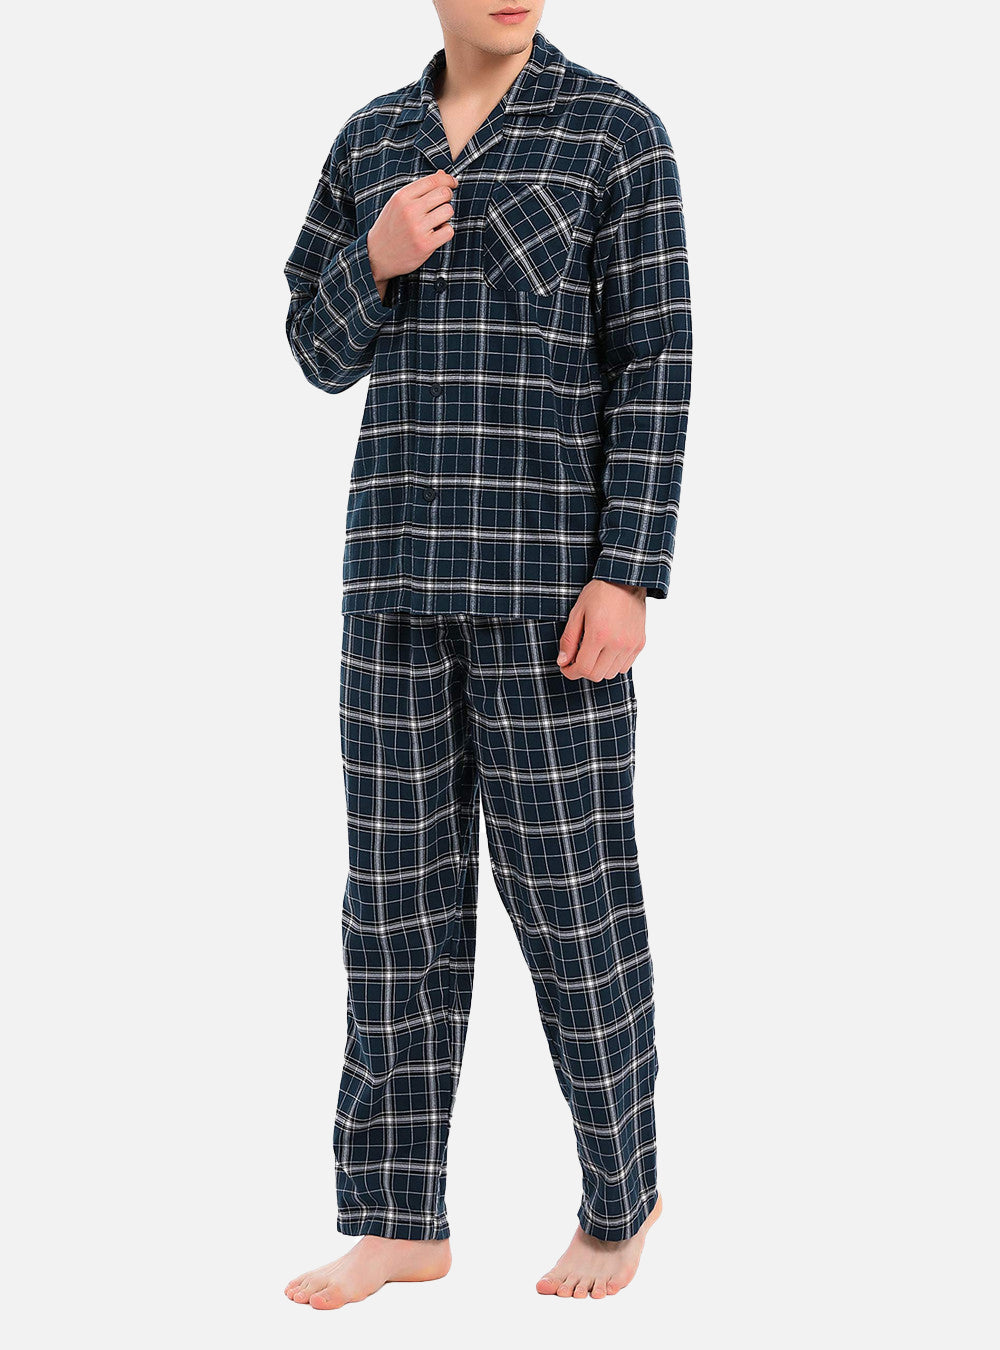 LANBAOSI Mens Pajama Sets Soft Flannel Cotton Sleepwear Long Sleeve Button  Down Plaid Shirt Pants Pjs Set Loungewear Navy Blue : : Clothing,  Shoes & Accessories